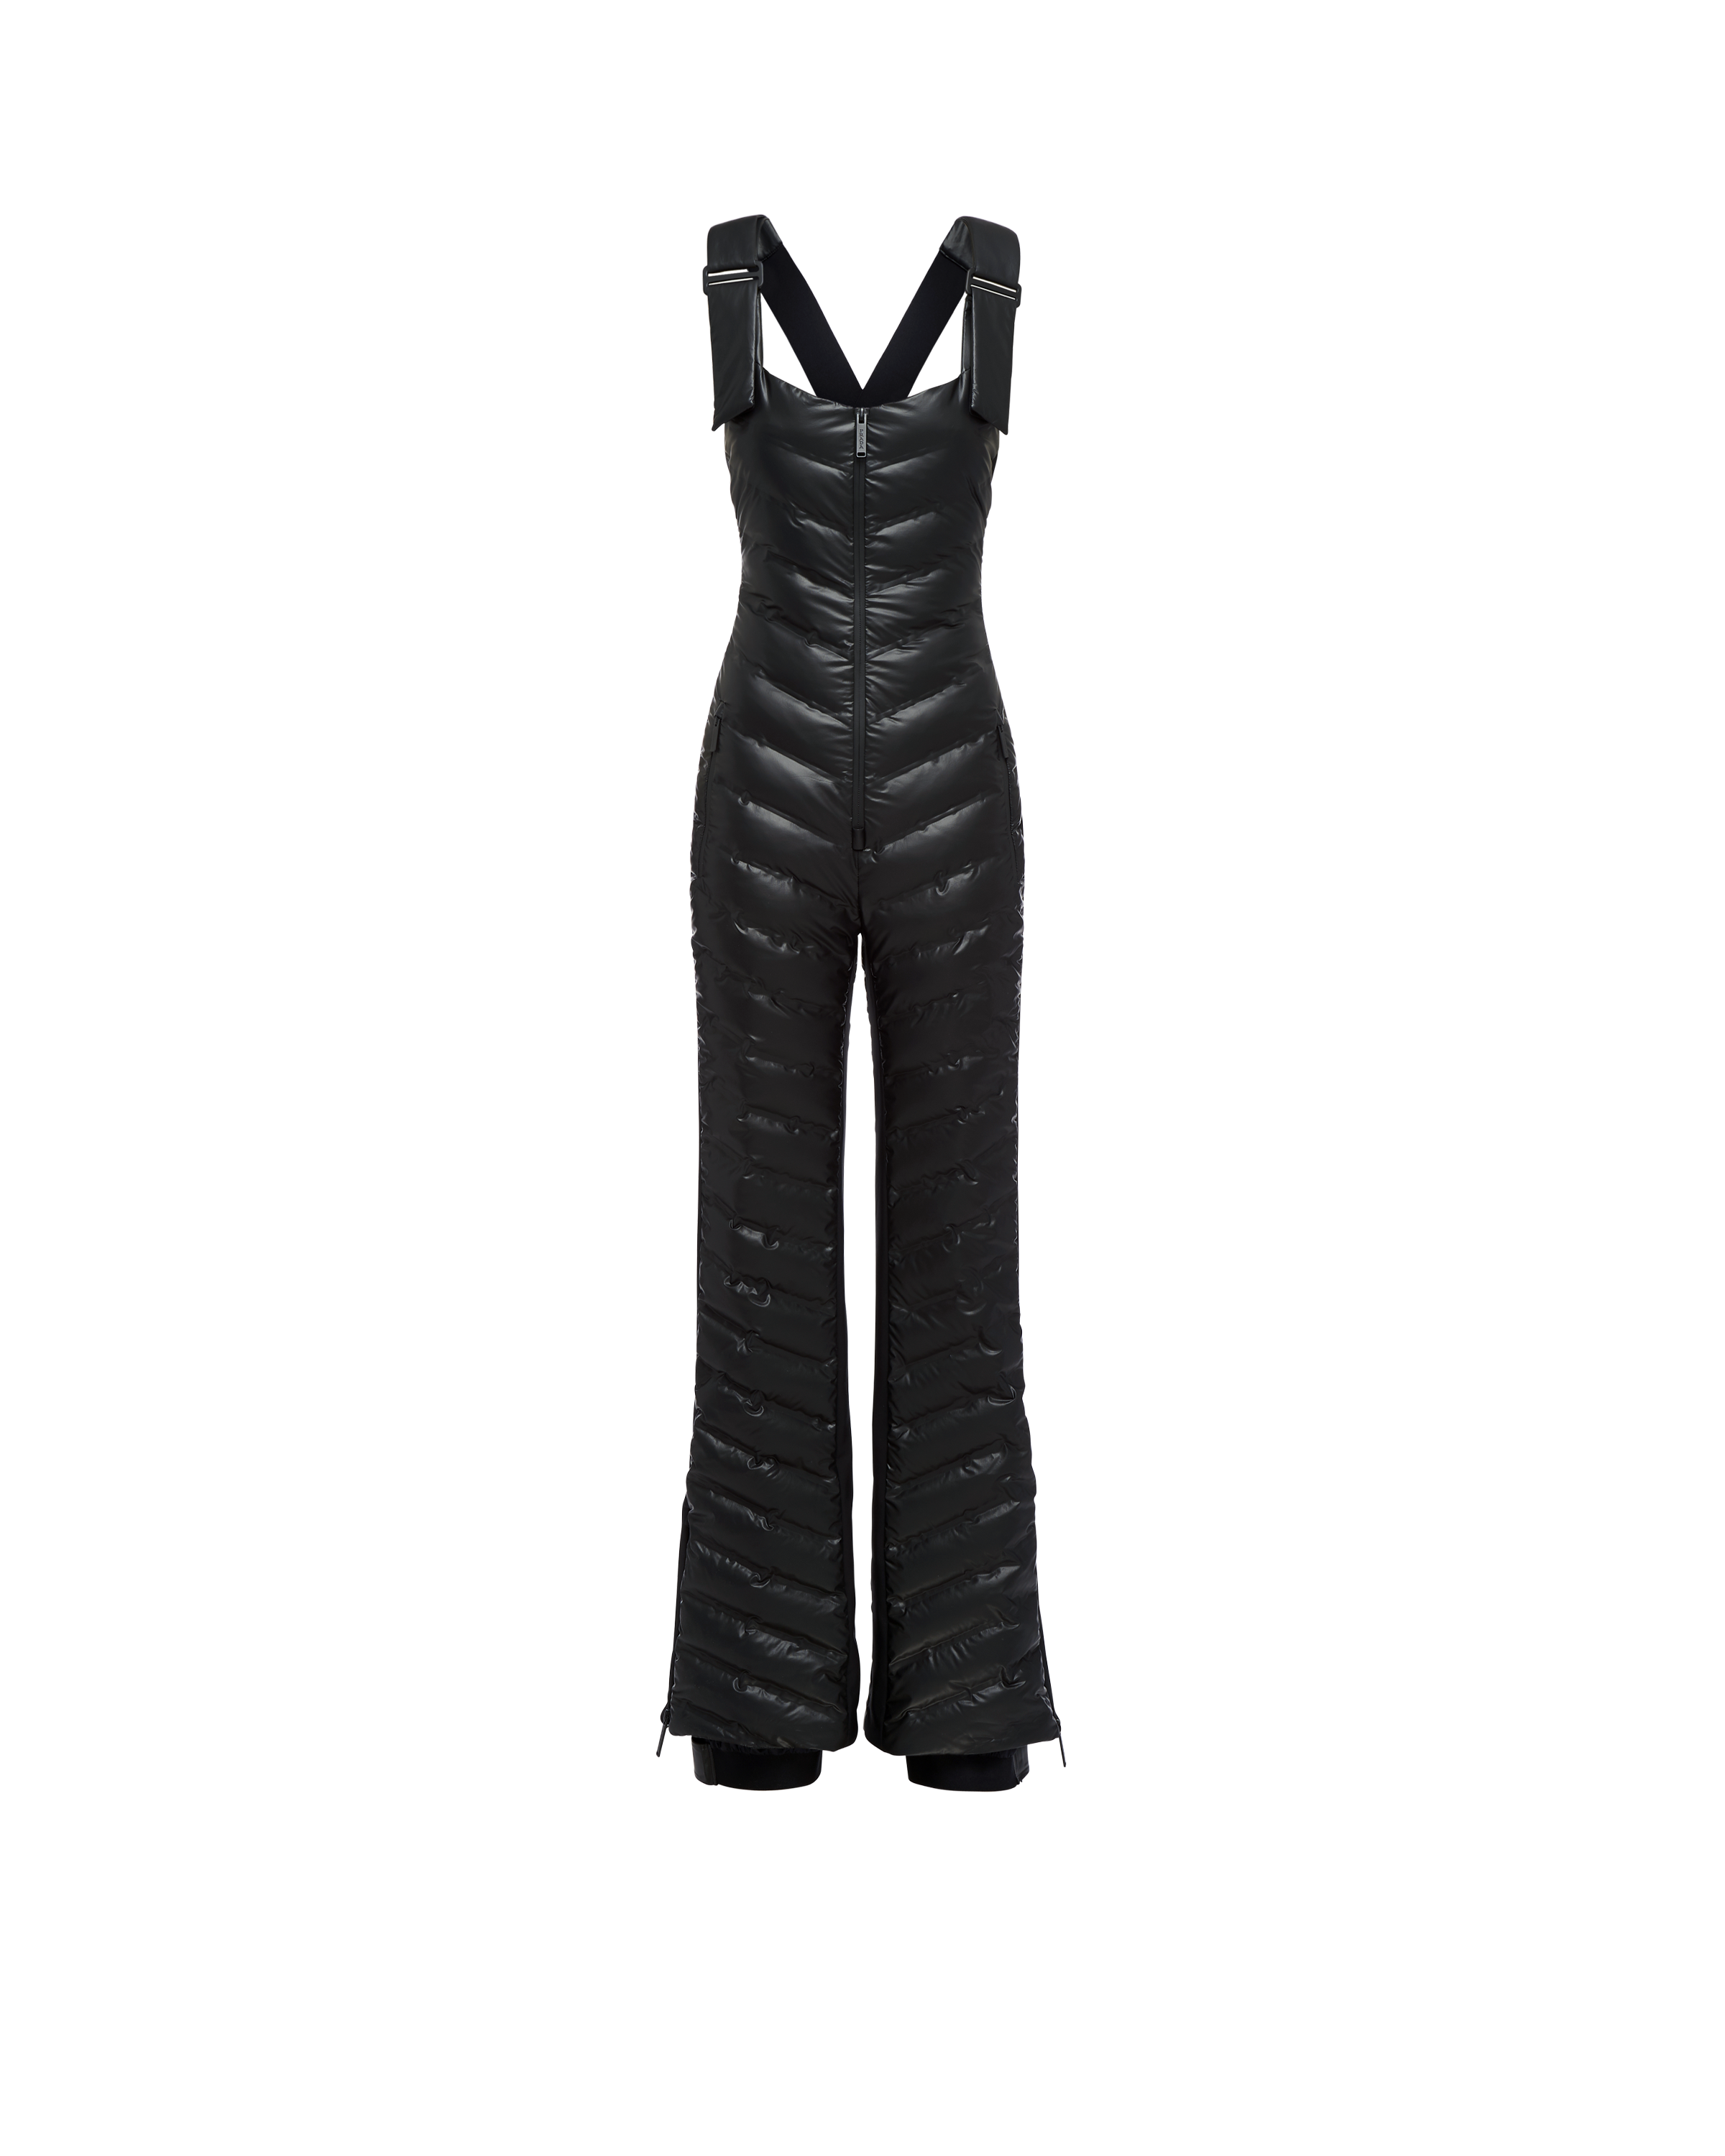 A black puffer ski suit